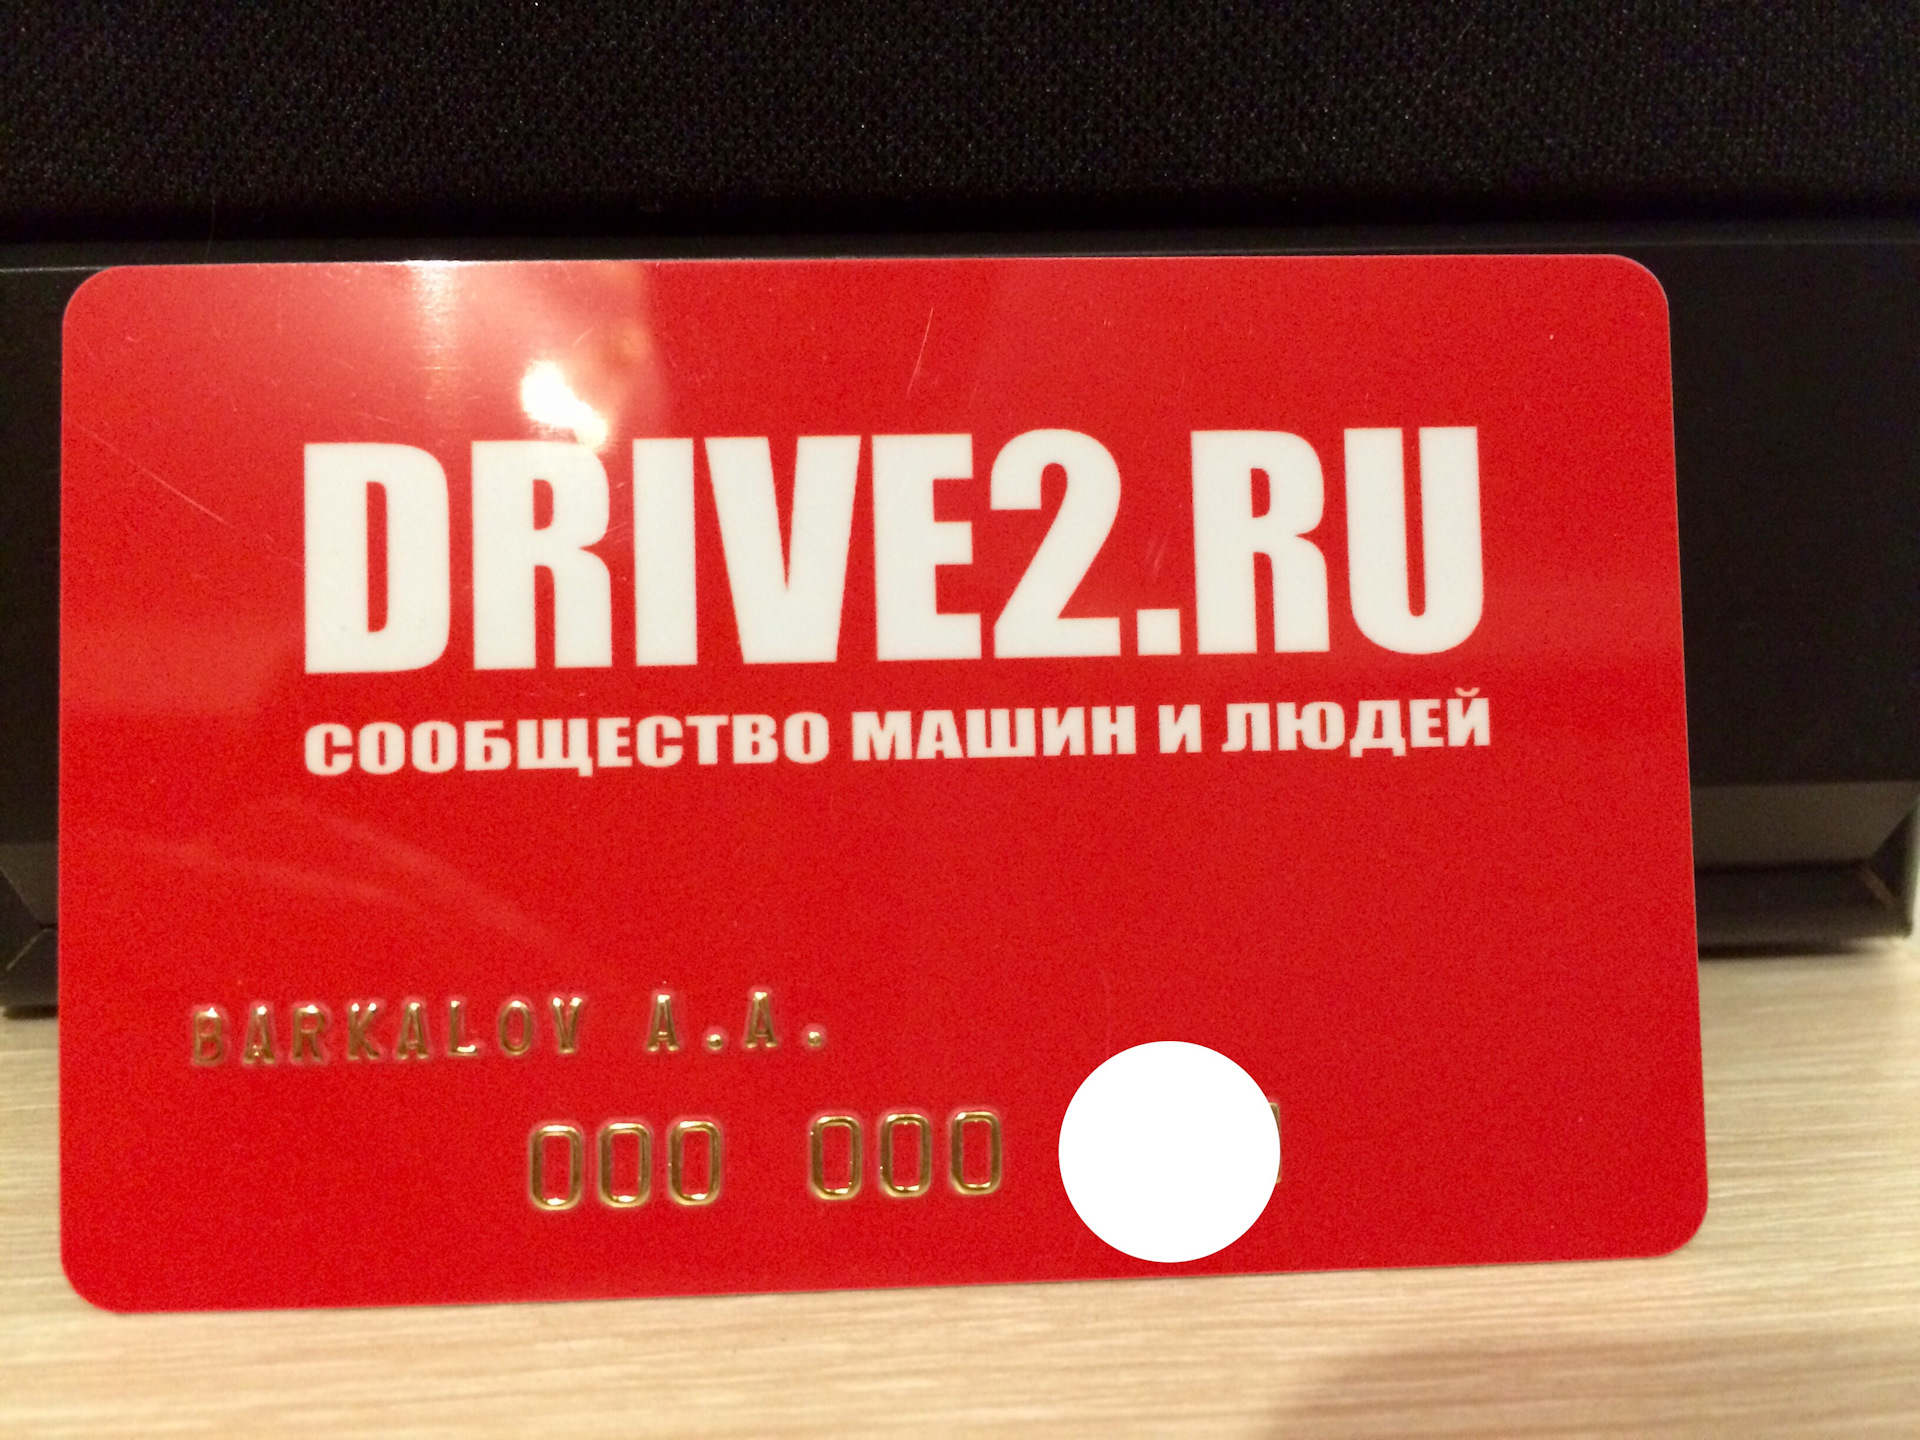 Drive card. Карта драйв 2. Drive карта. Карта drive2 Москва. Drive2.ru карта.